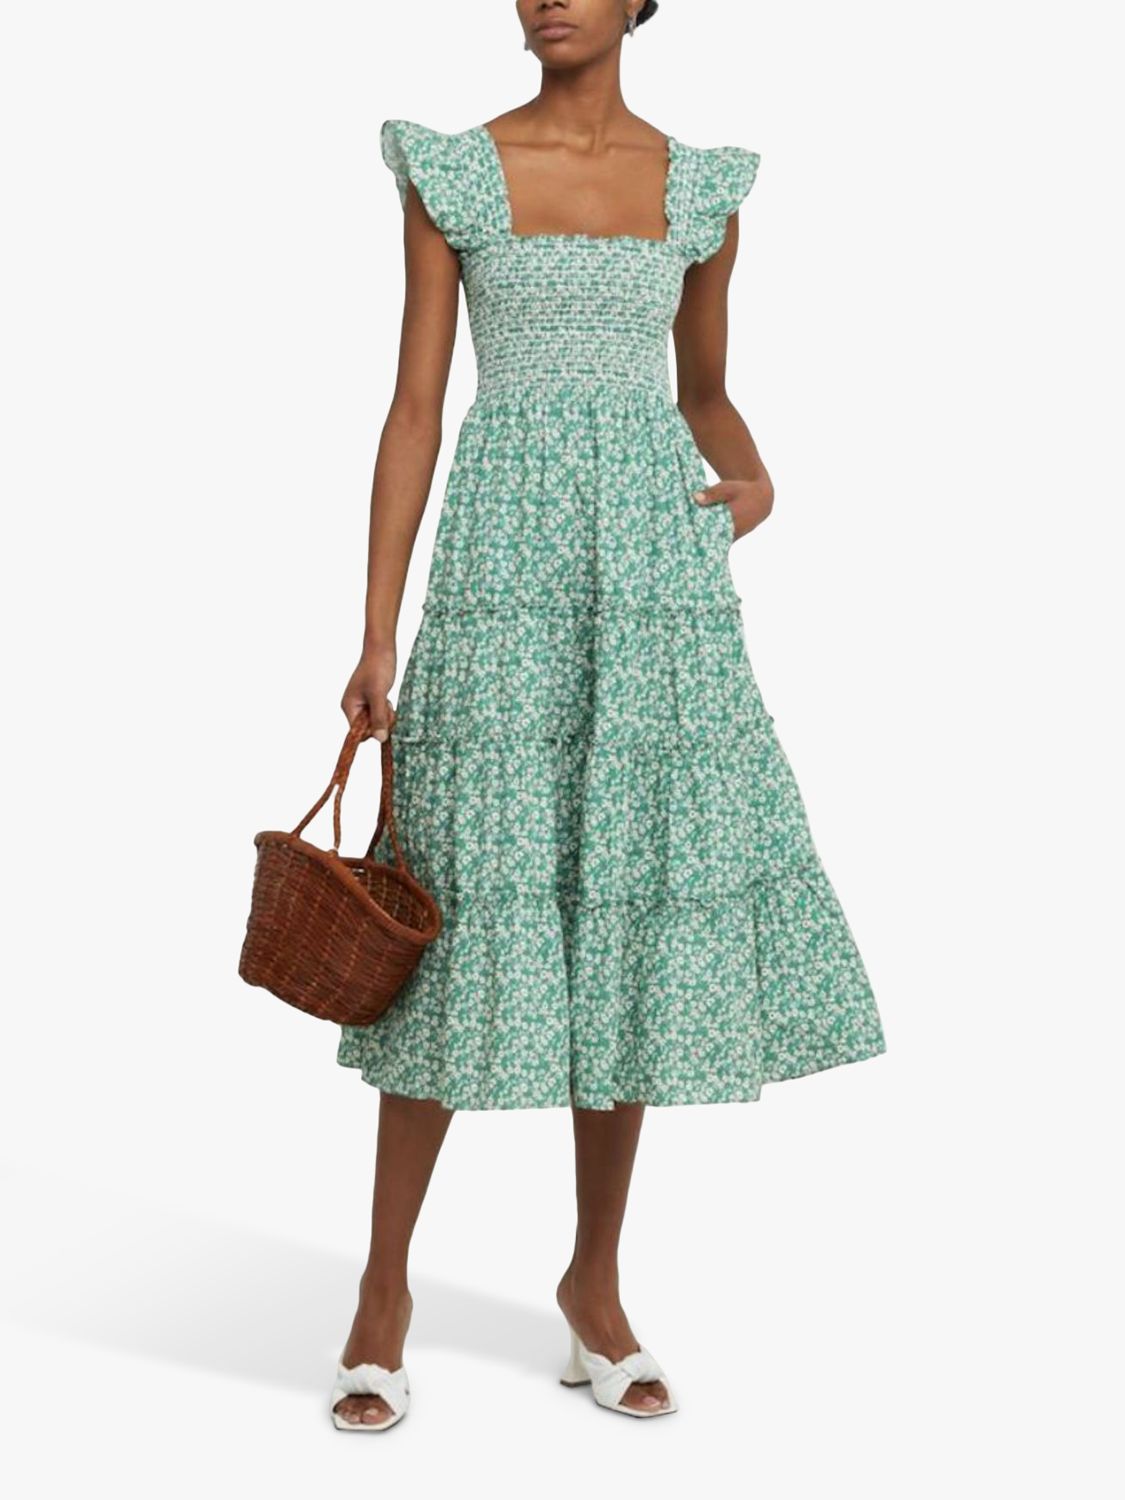 kourt Calypso Ruffled Smocked Dress, Green/Floral at John Lewis & Partners